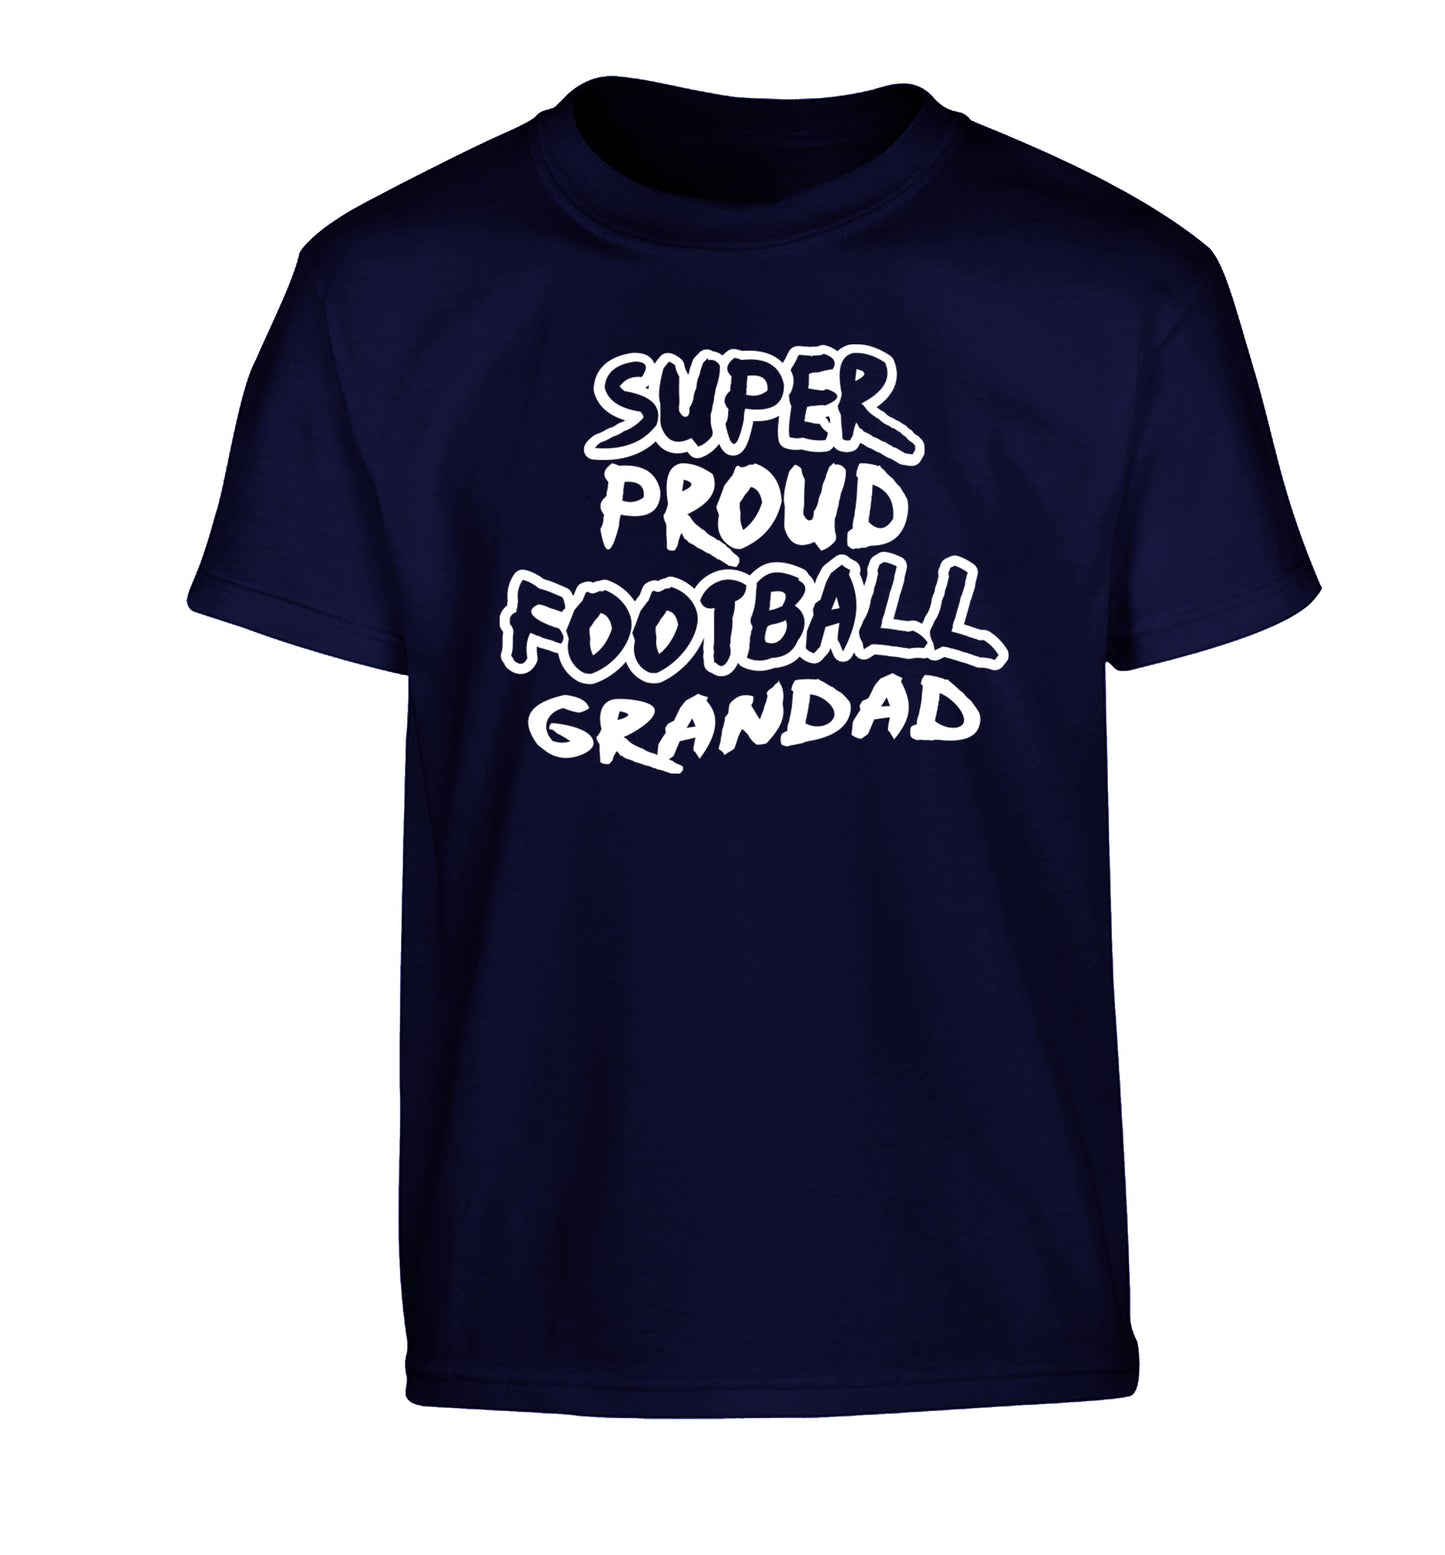 Super proud football grandad Children's navy Tshirt 12-14 Years